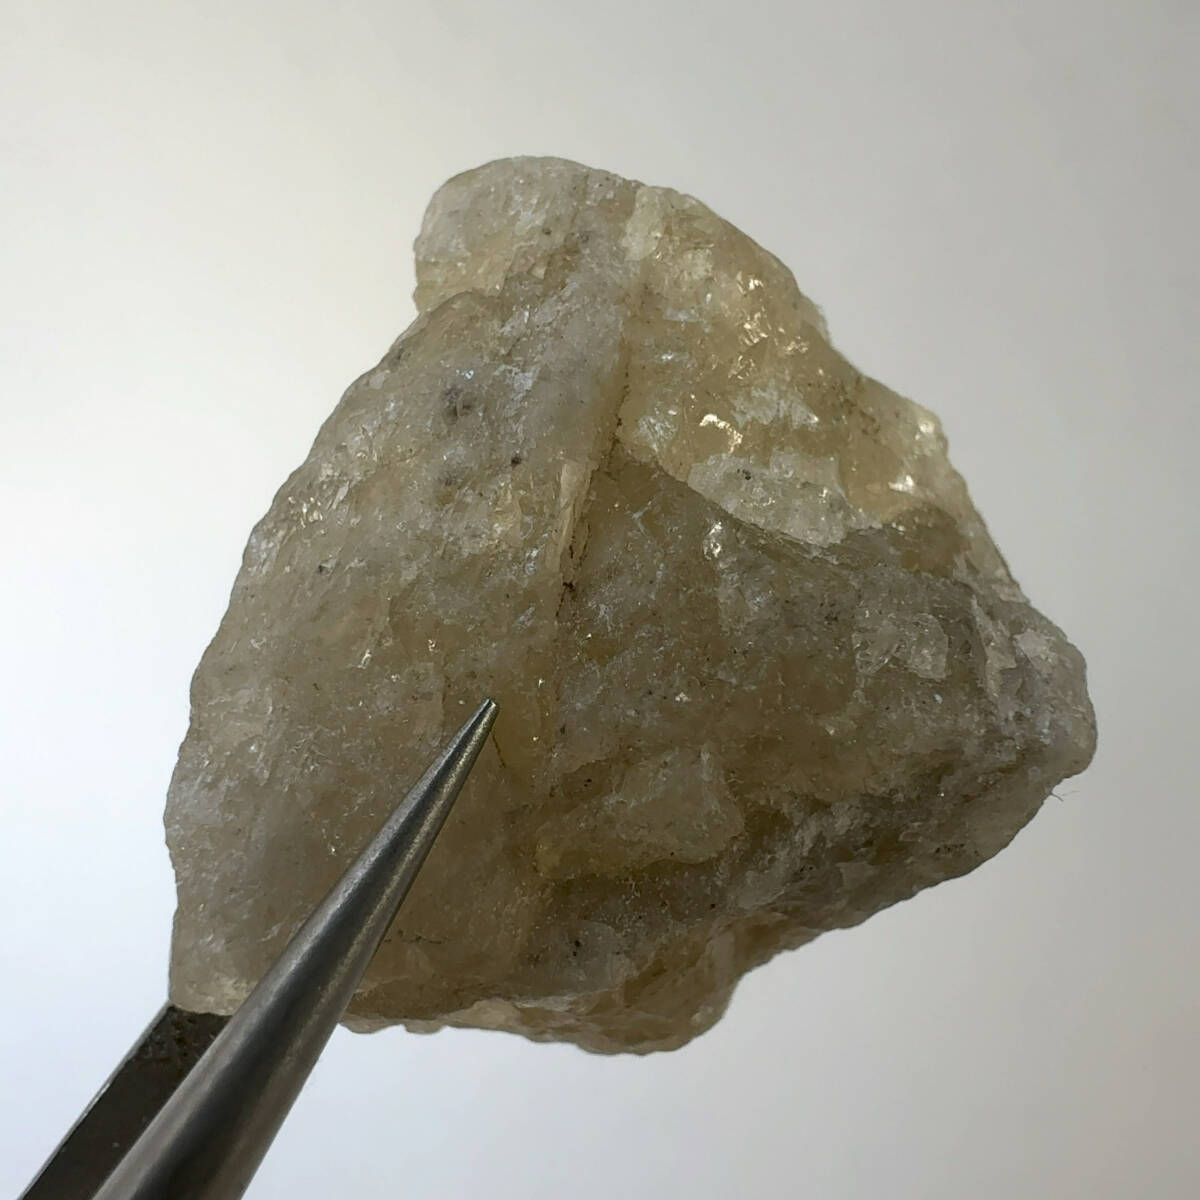 【E23996】 アンブリゴナイト アンブリゴ石 天然石 原石 鉱物 パワーストーン